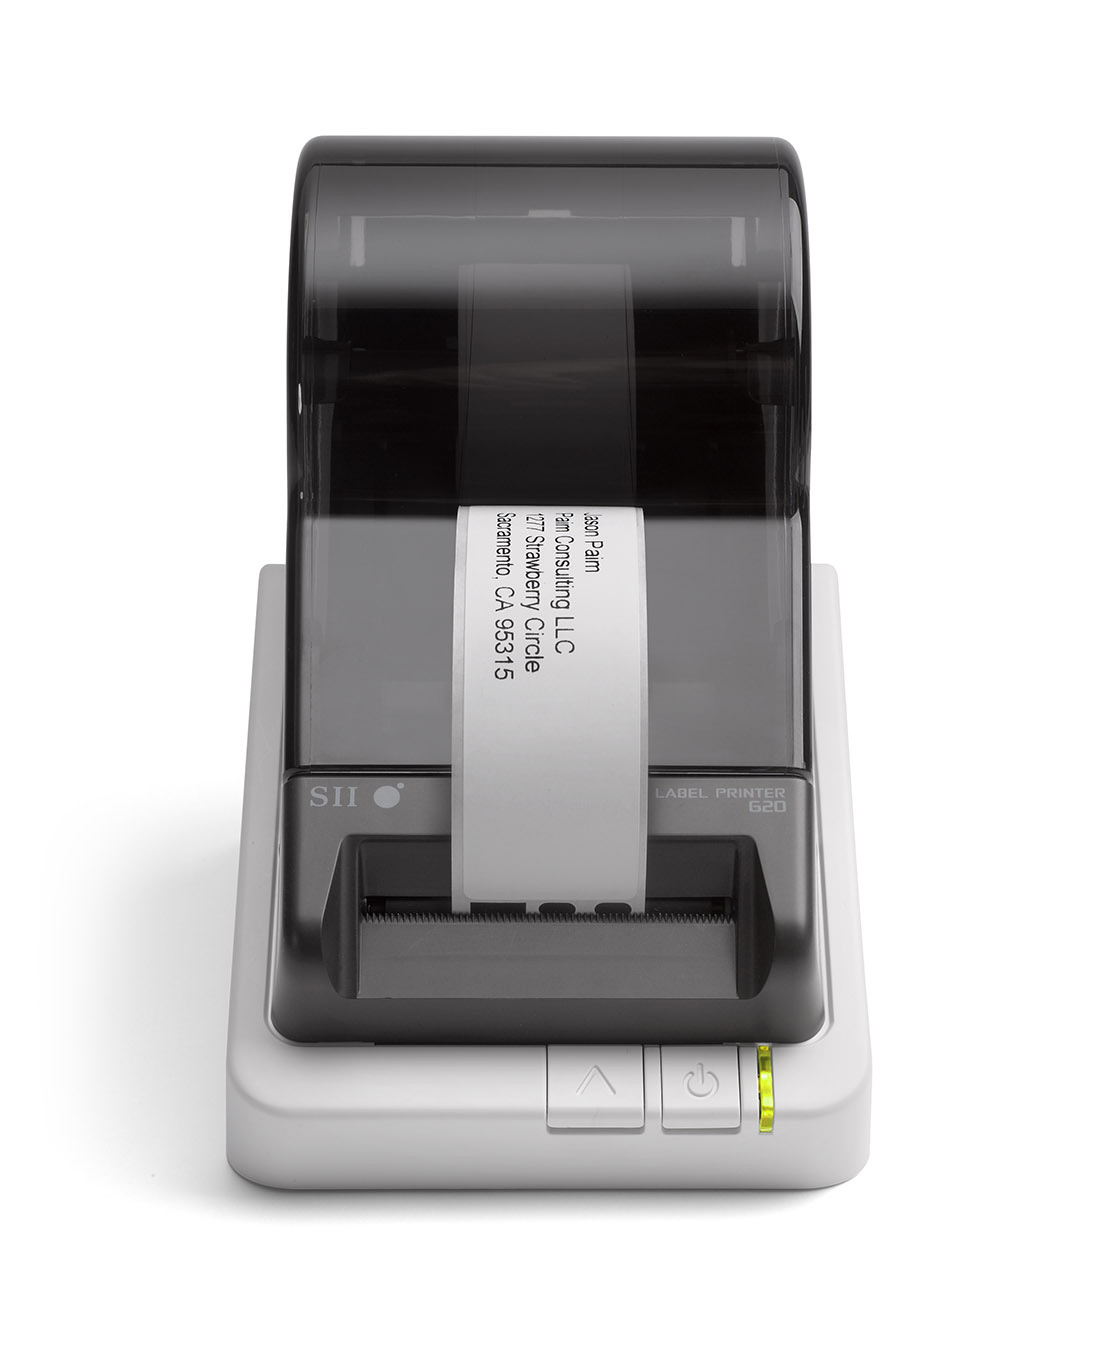 SLP 620 - Label Printers | Seiko Instruments USA